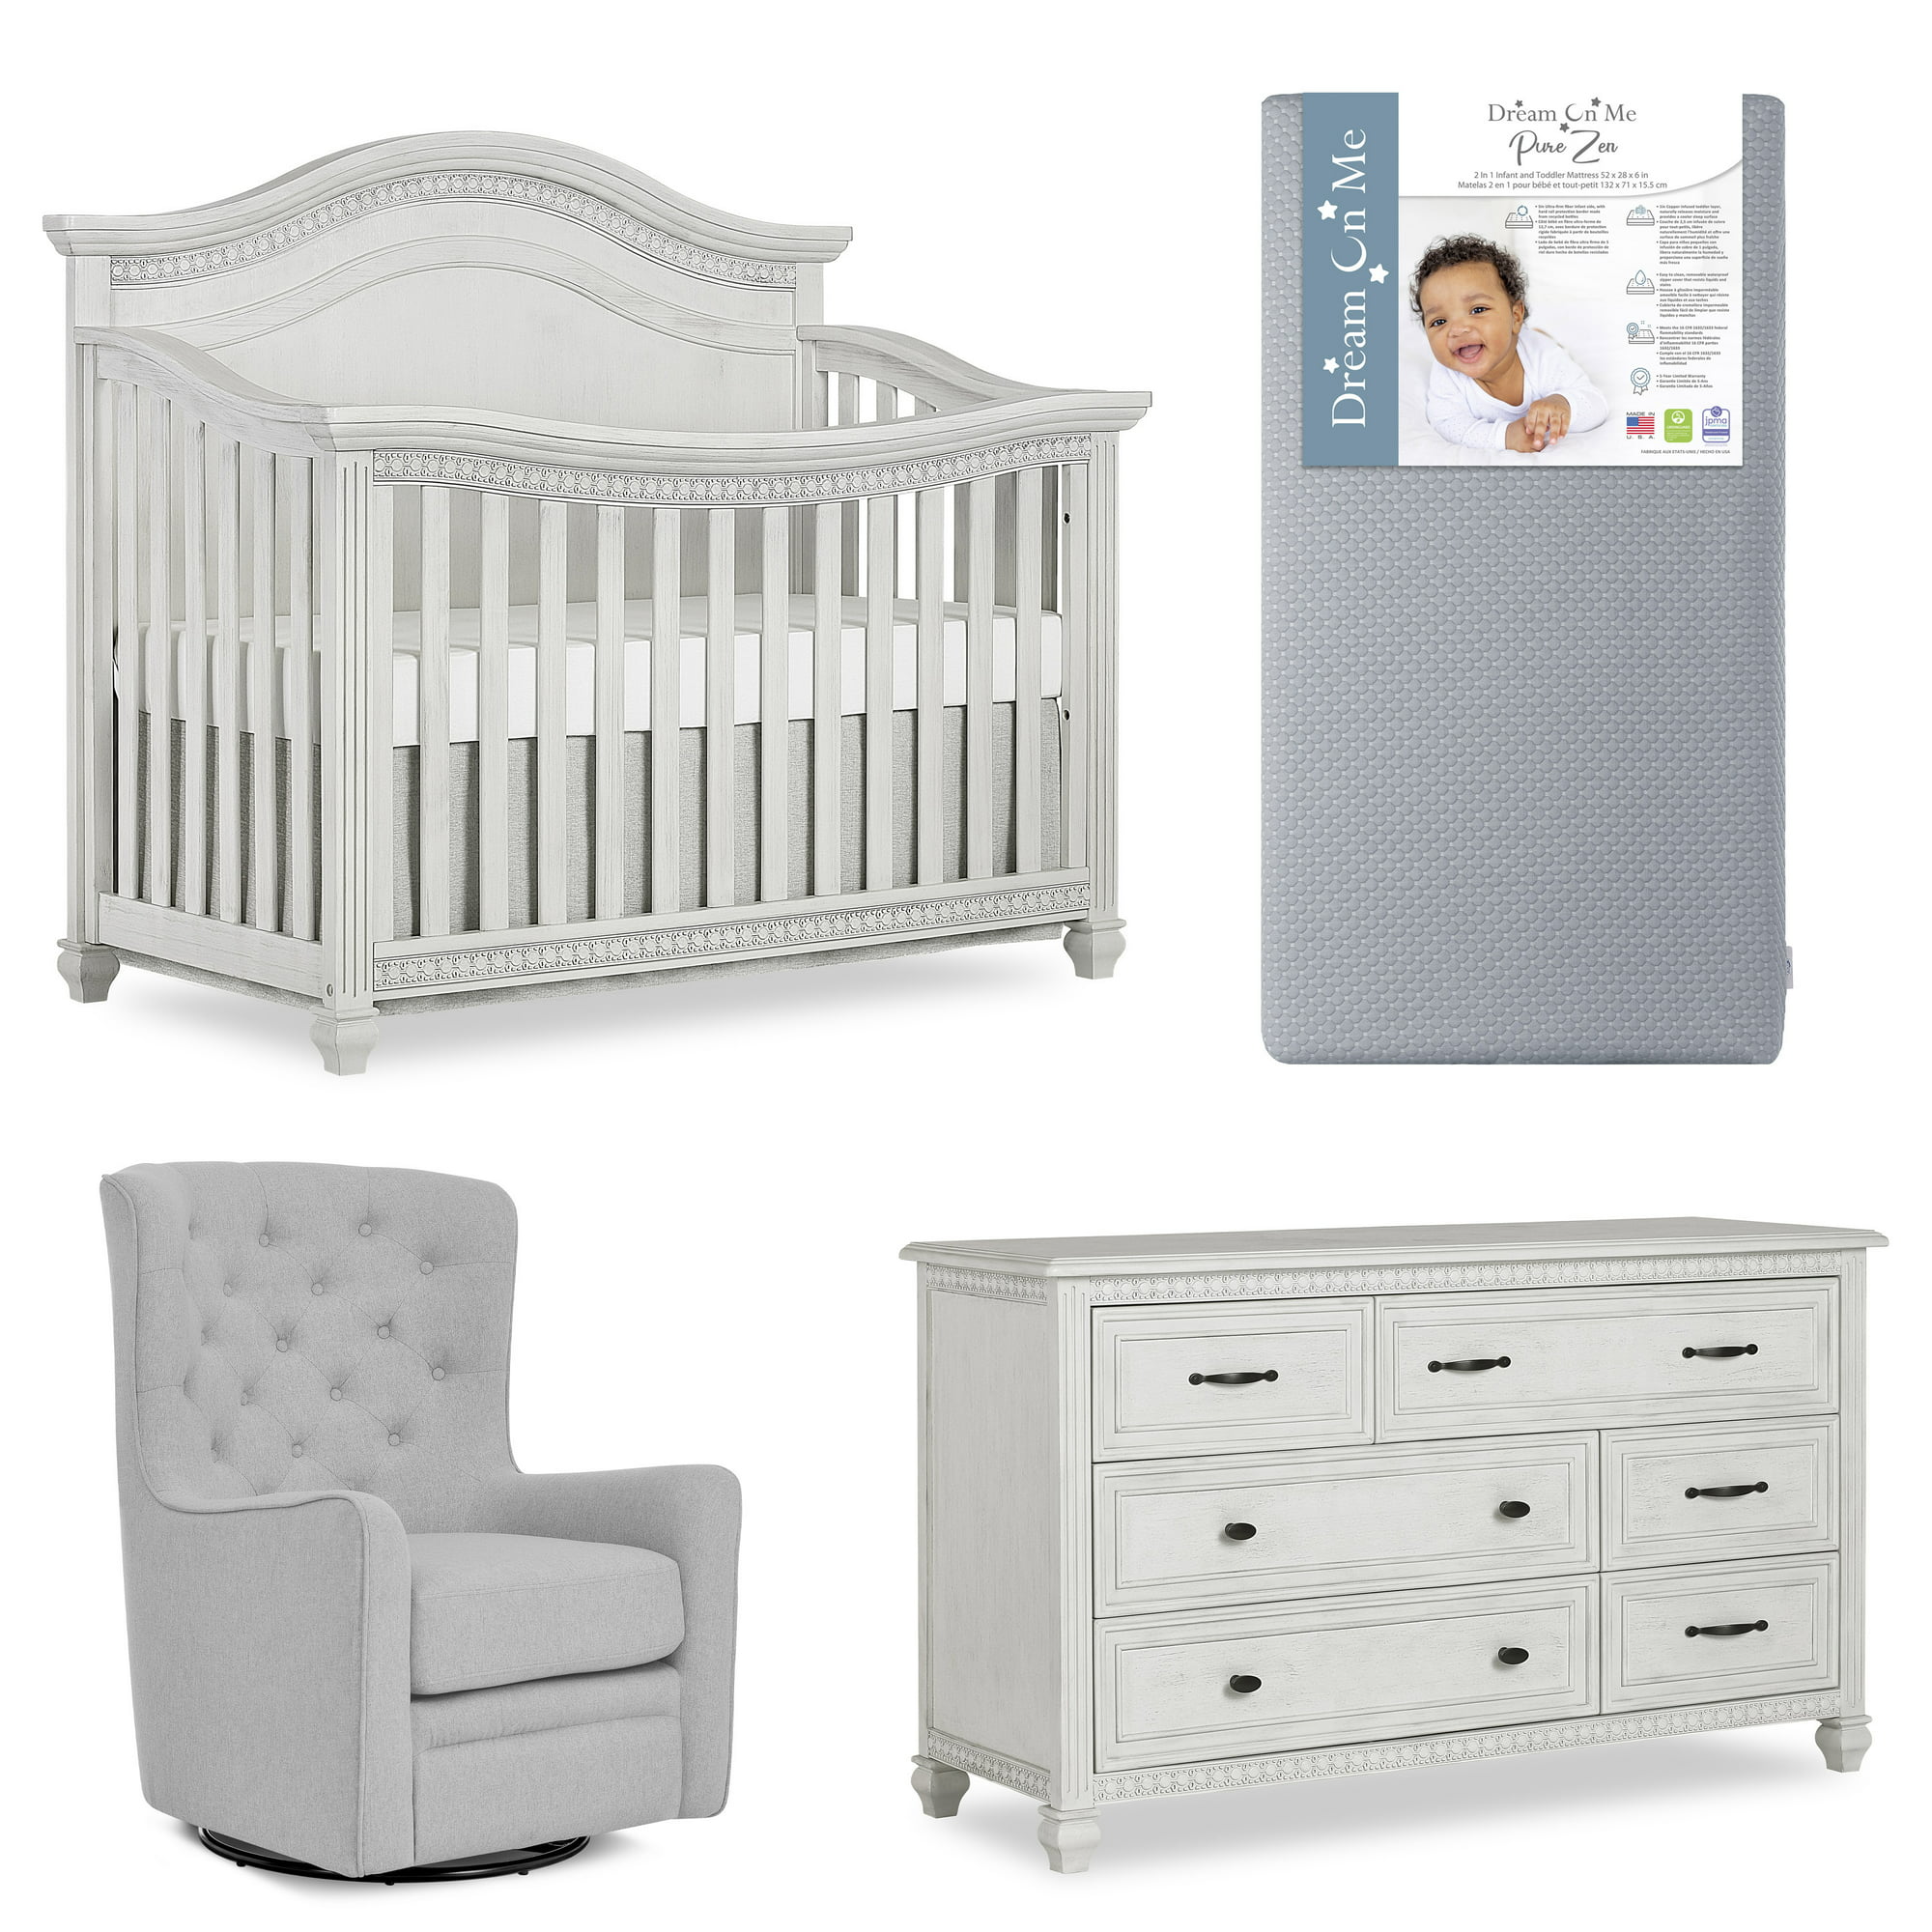 Evolur Nursery Essentials Bundle of Madison 5-in-1 Convertible Crib, Double Dresser, Swivel Glider, Premium Dream On Me Mattres